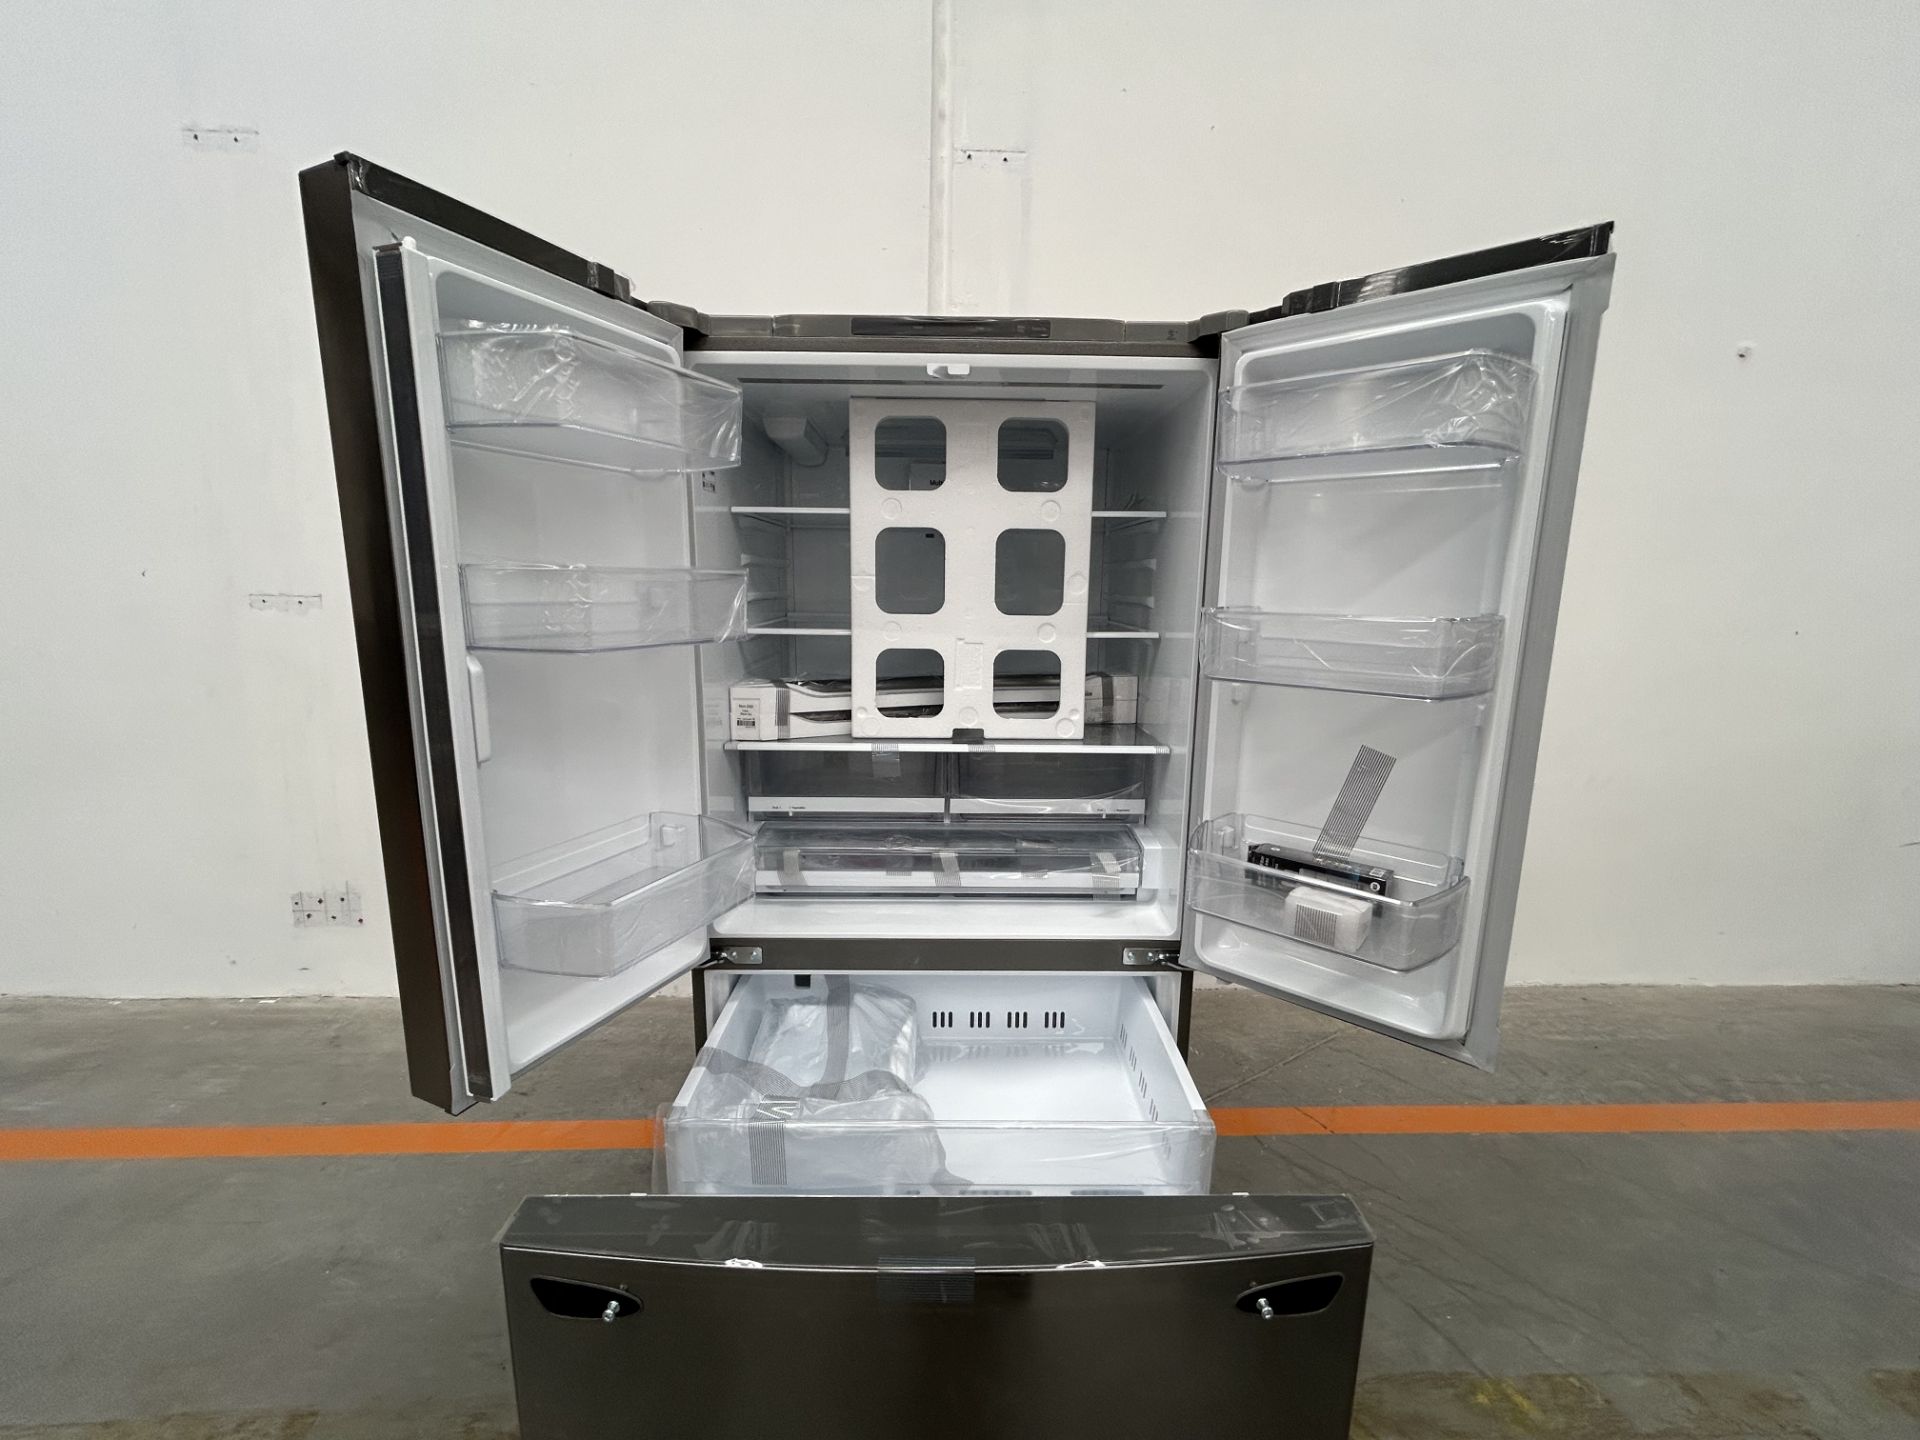 (NUEVO) Refrigerador Marca LG, Modelo GM29BIP, Serie L0823, Color GRIS - Image 4 of 4